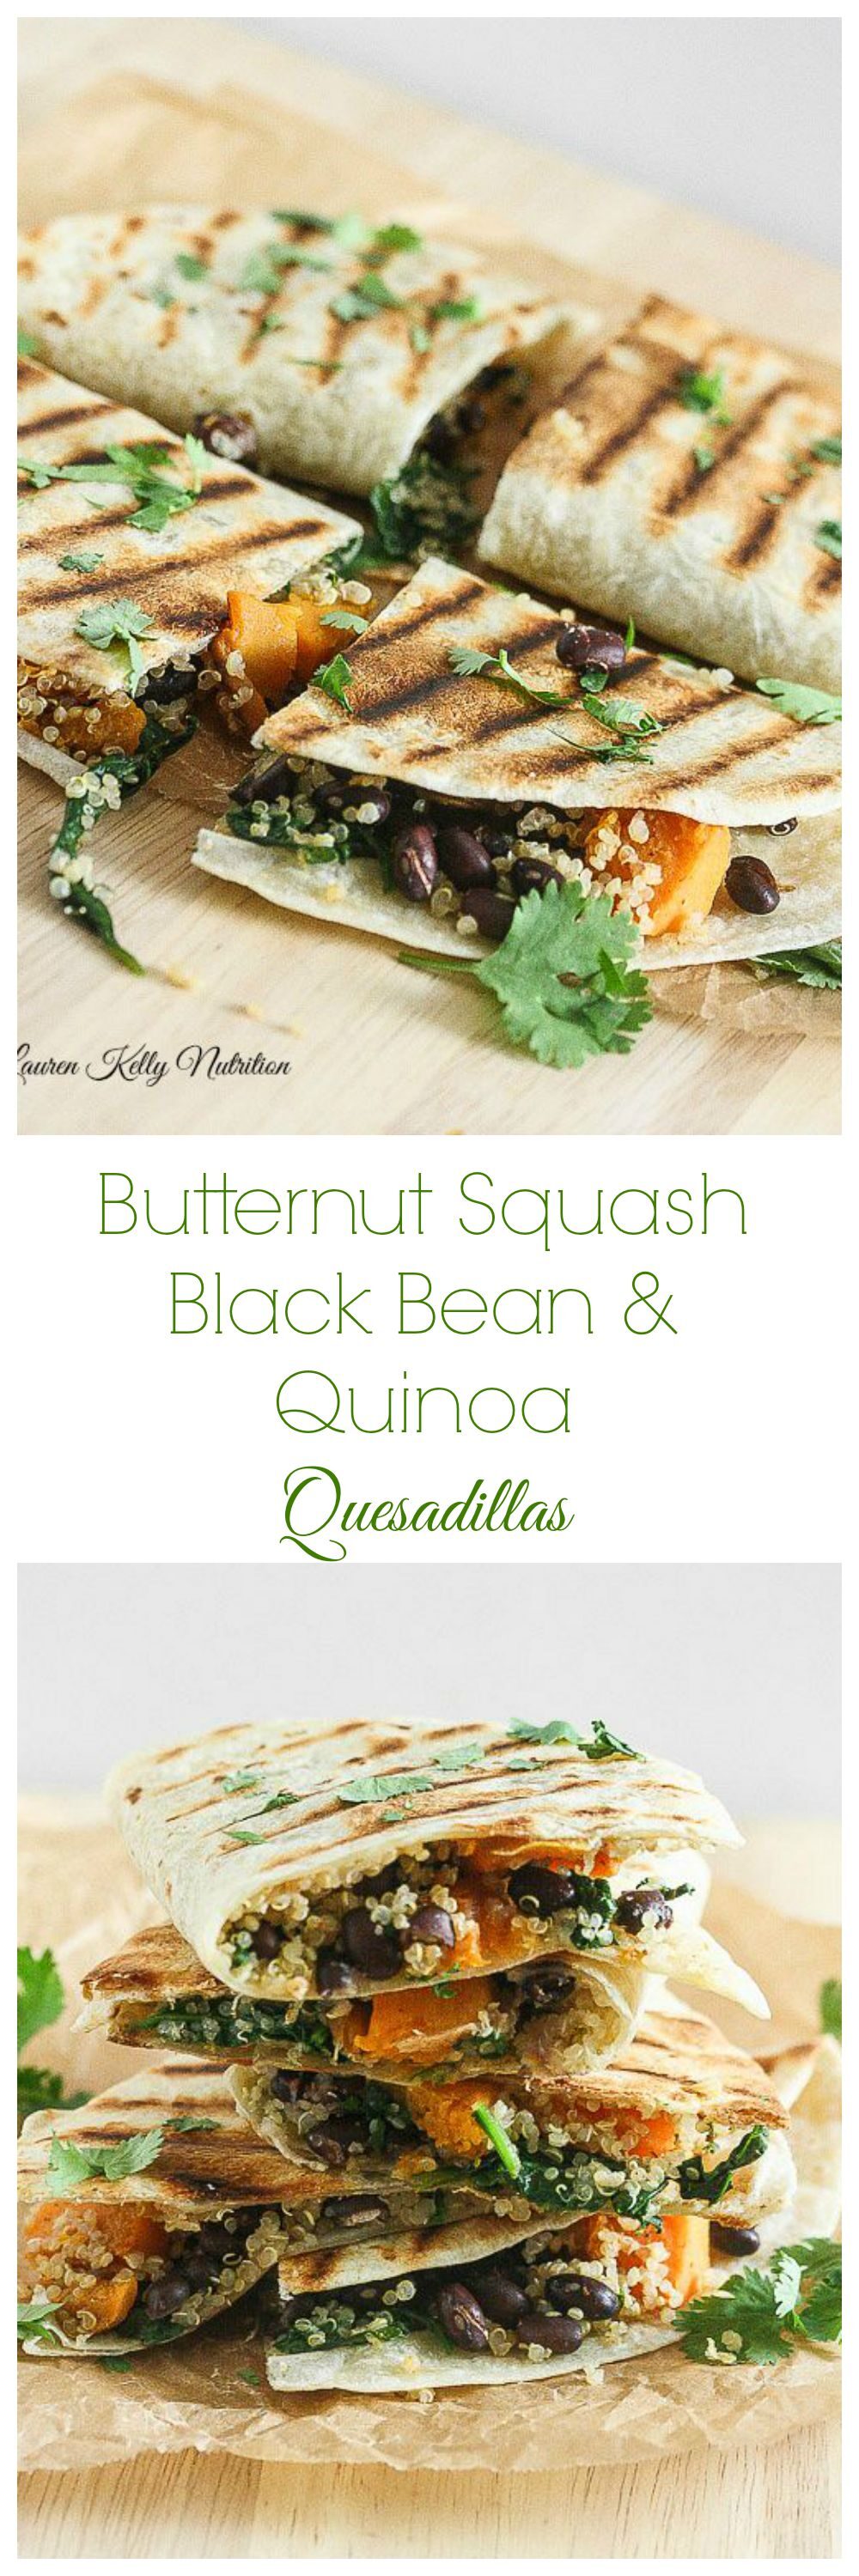 These Butternut Squash Black Bean & Quinoa Quesadillas are delicious and healthy too! The best quesadilla recipe ever.